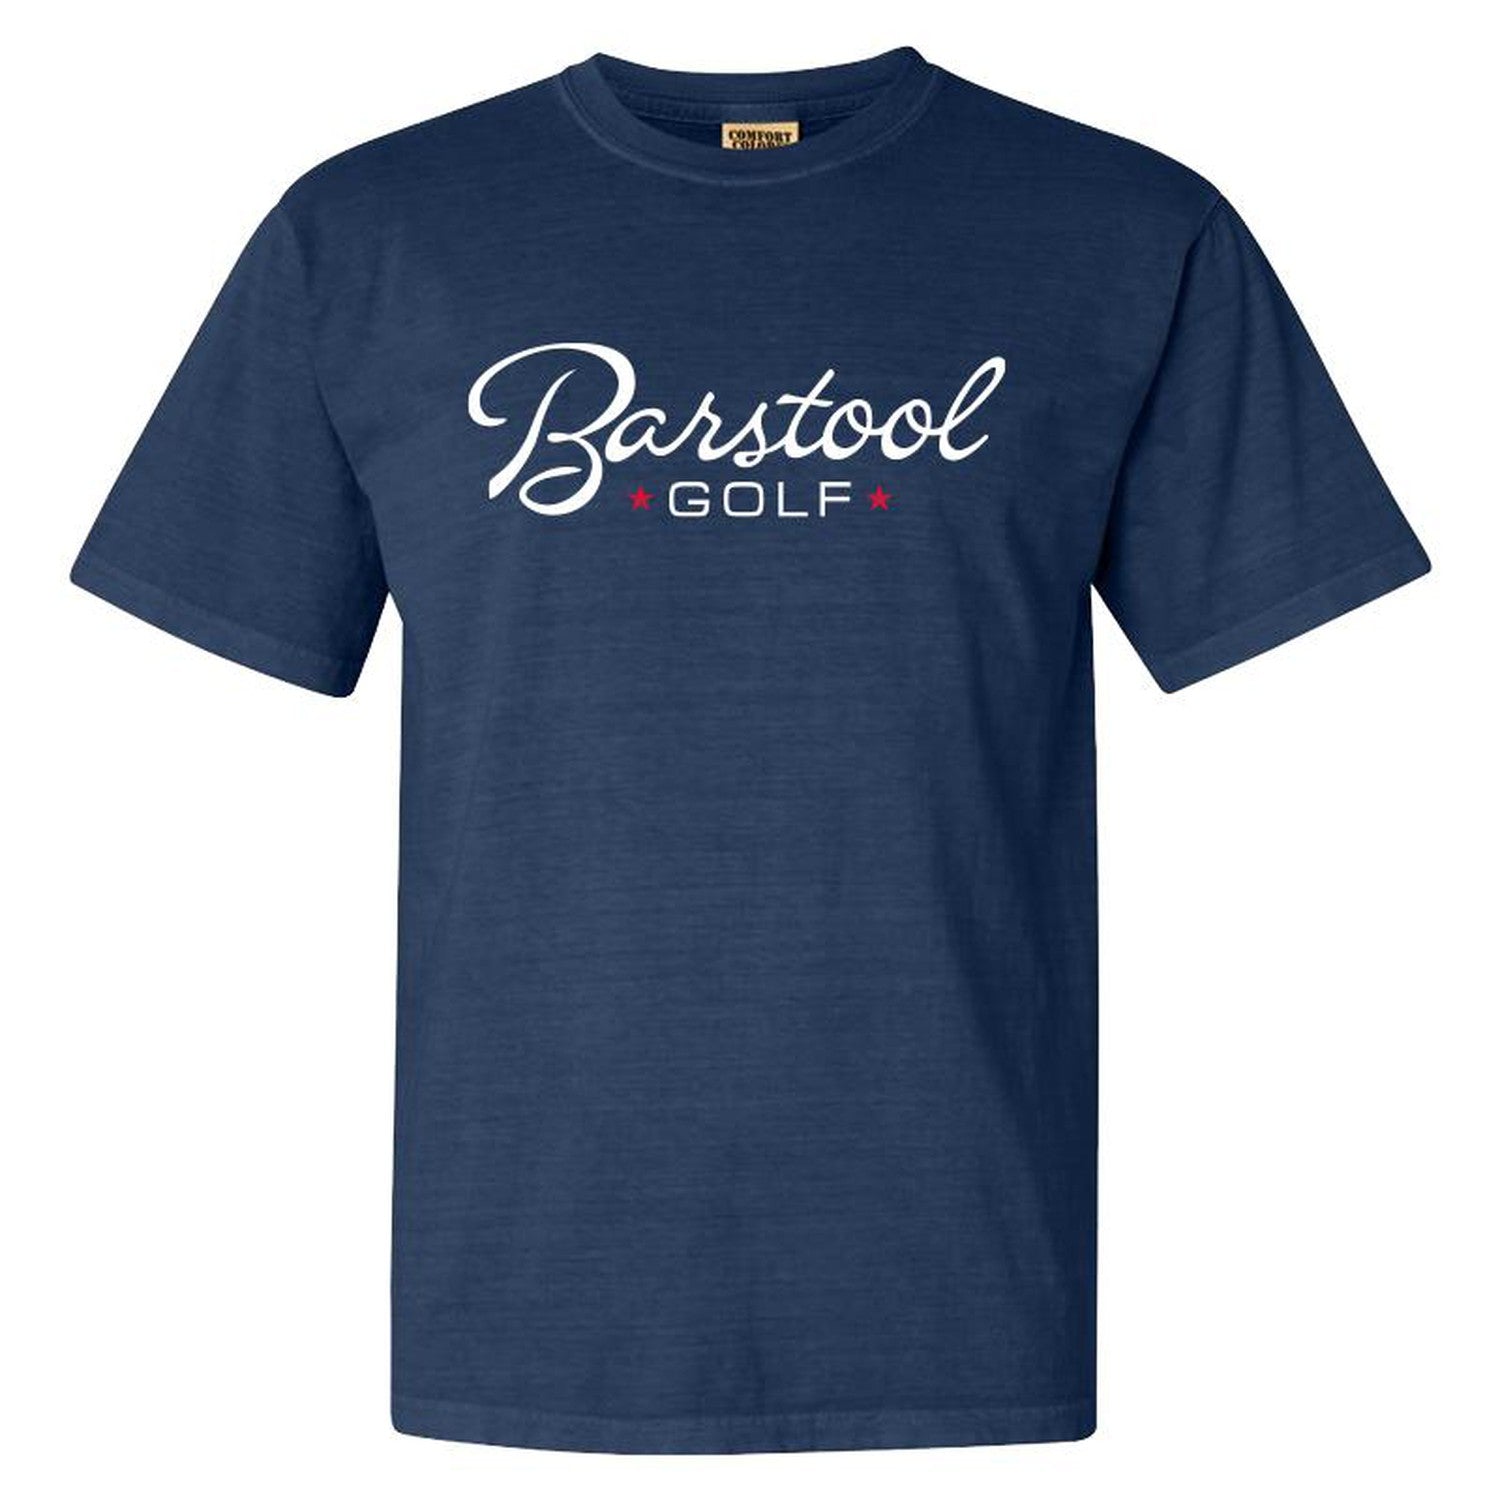 Barstool Golf USA II Tee Fore Play TShirts, Clothing & Merch